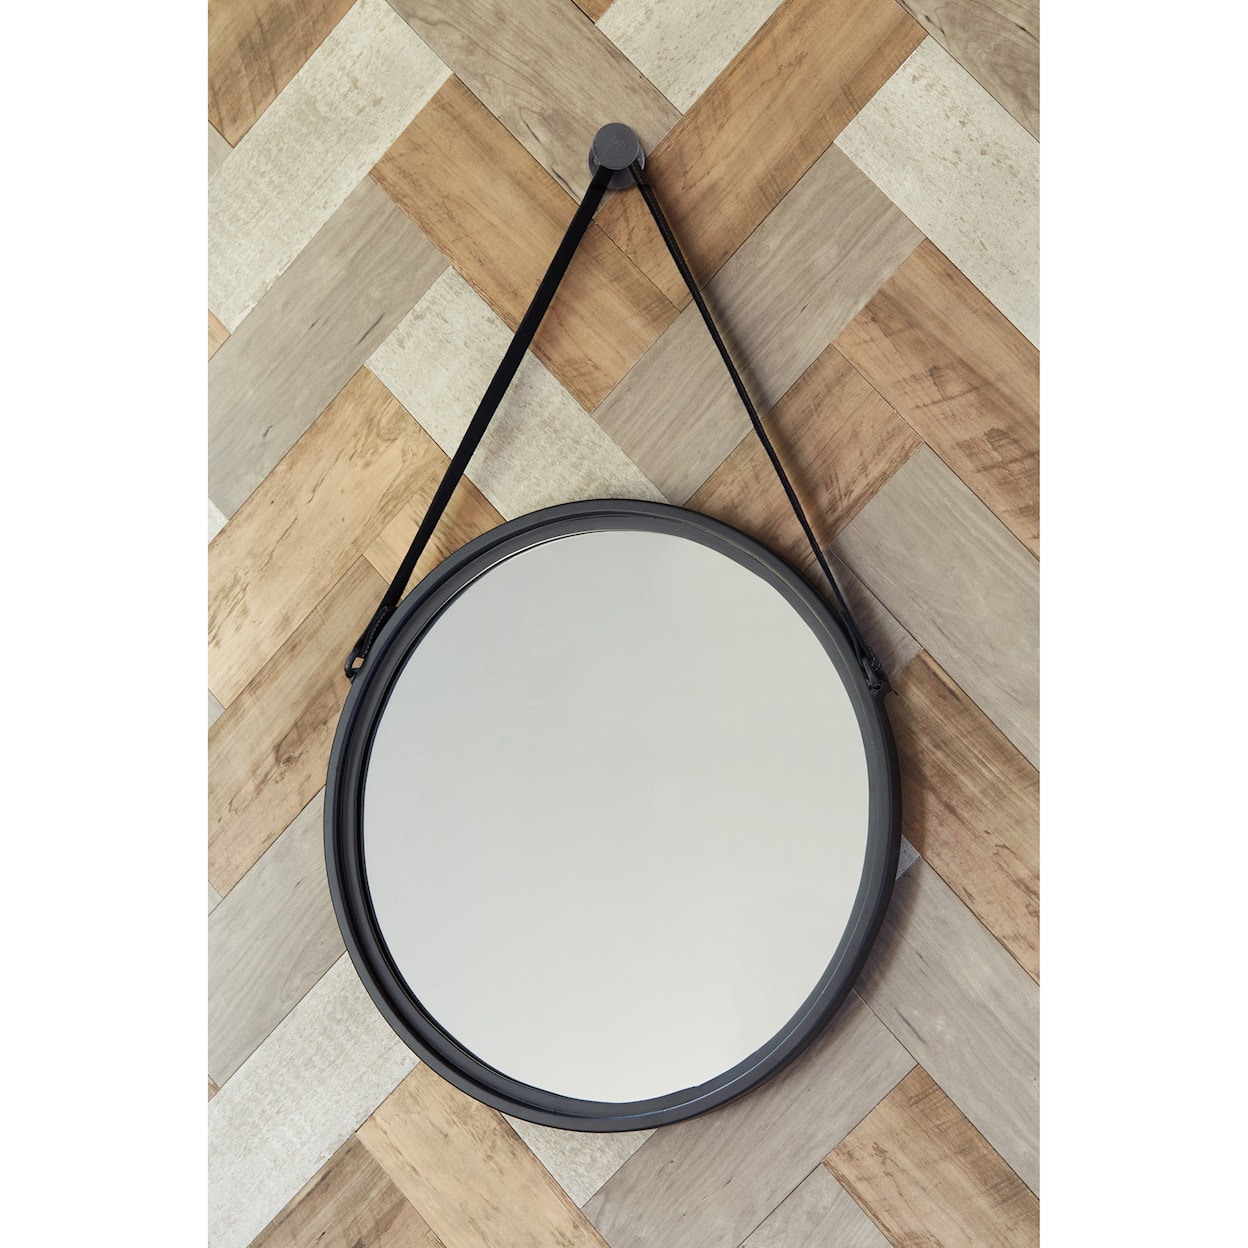 Signature Design by Ashley Furniture Accent Mirrors Dusan Black Accent Mirror